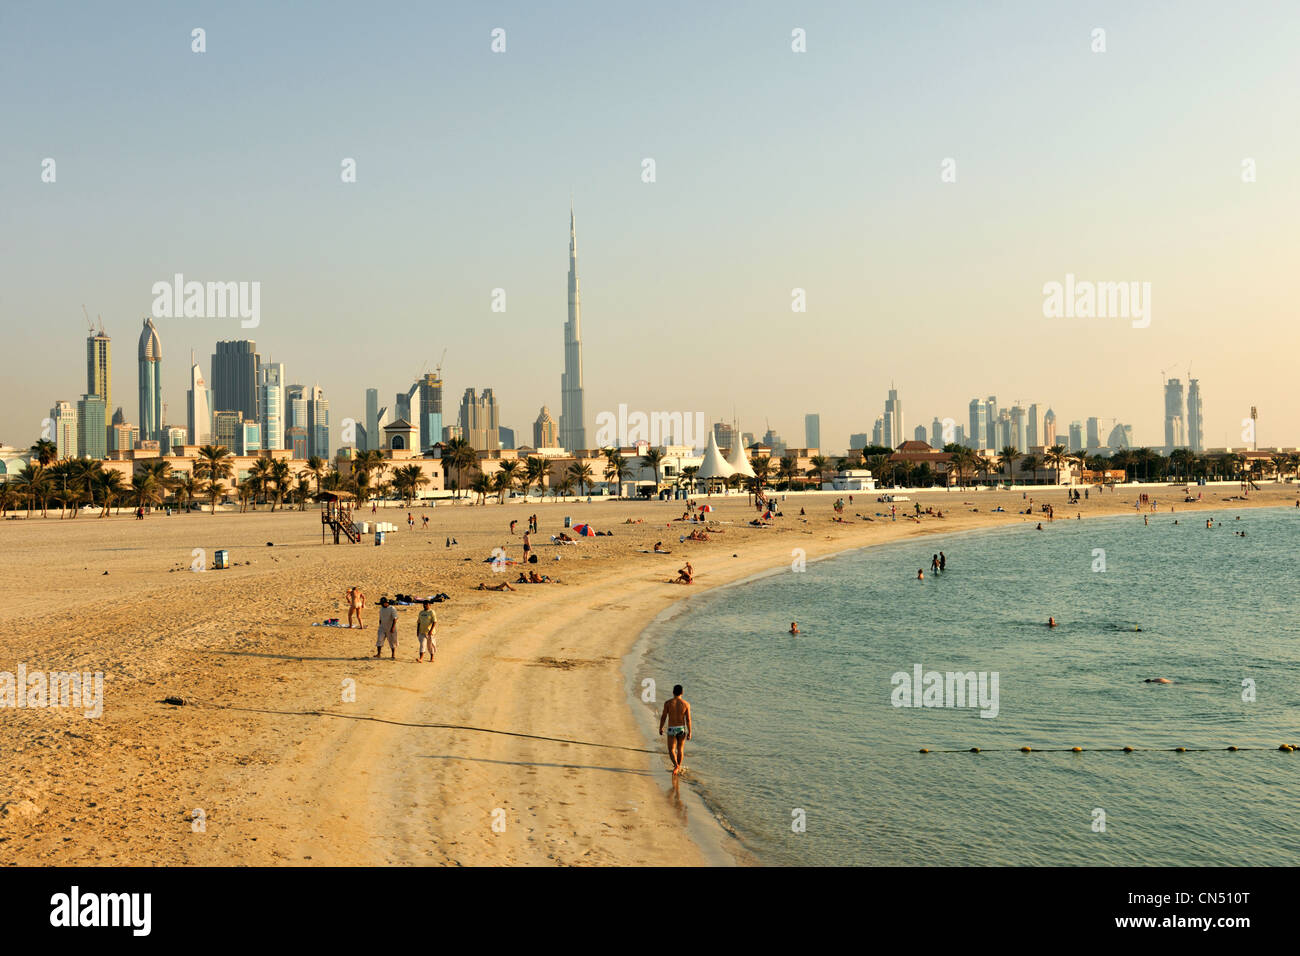 United Arab Emirates Dubai Jumeirah Beach With The Towers